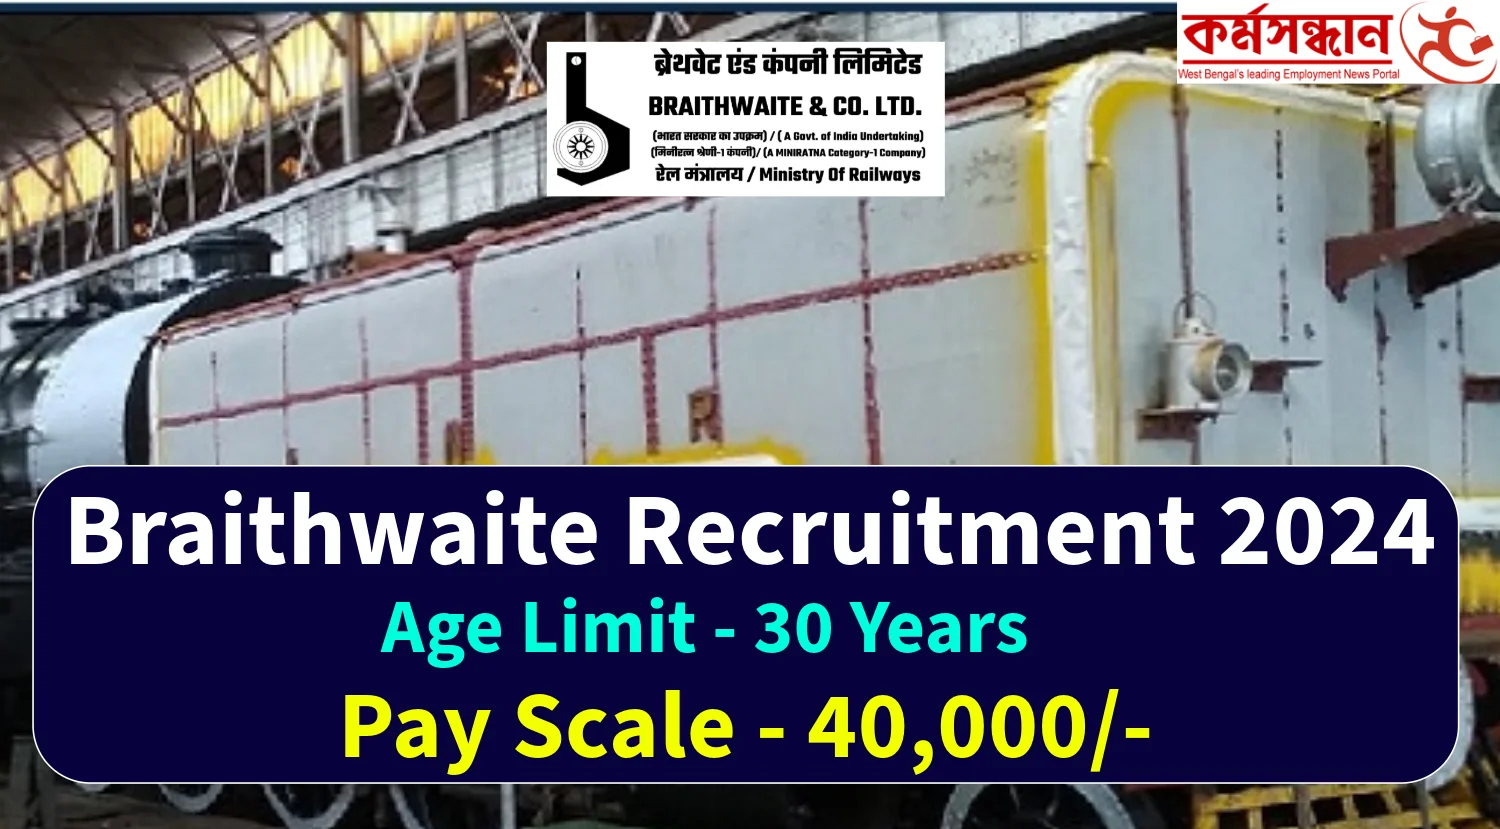 Braithwaite Recruitment 2024 for Executive Posts